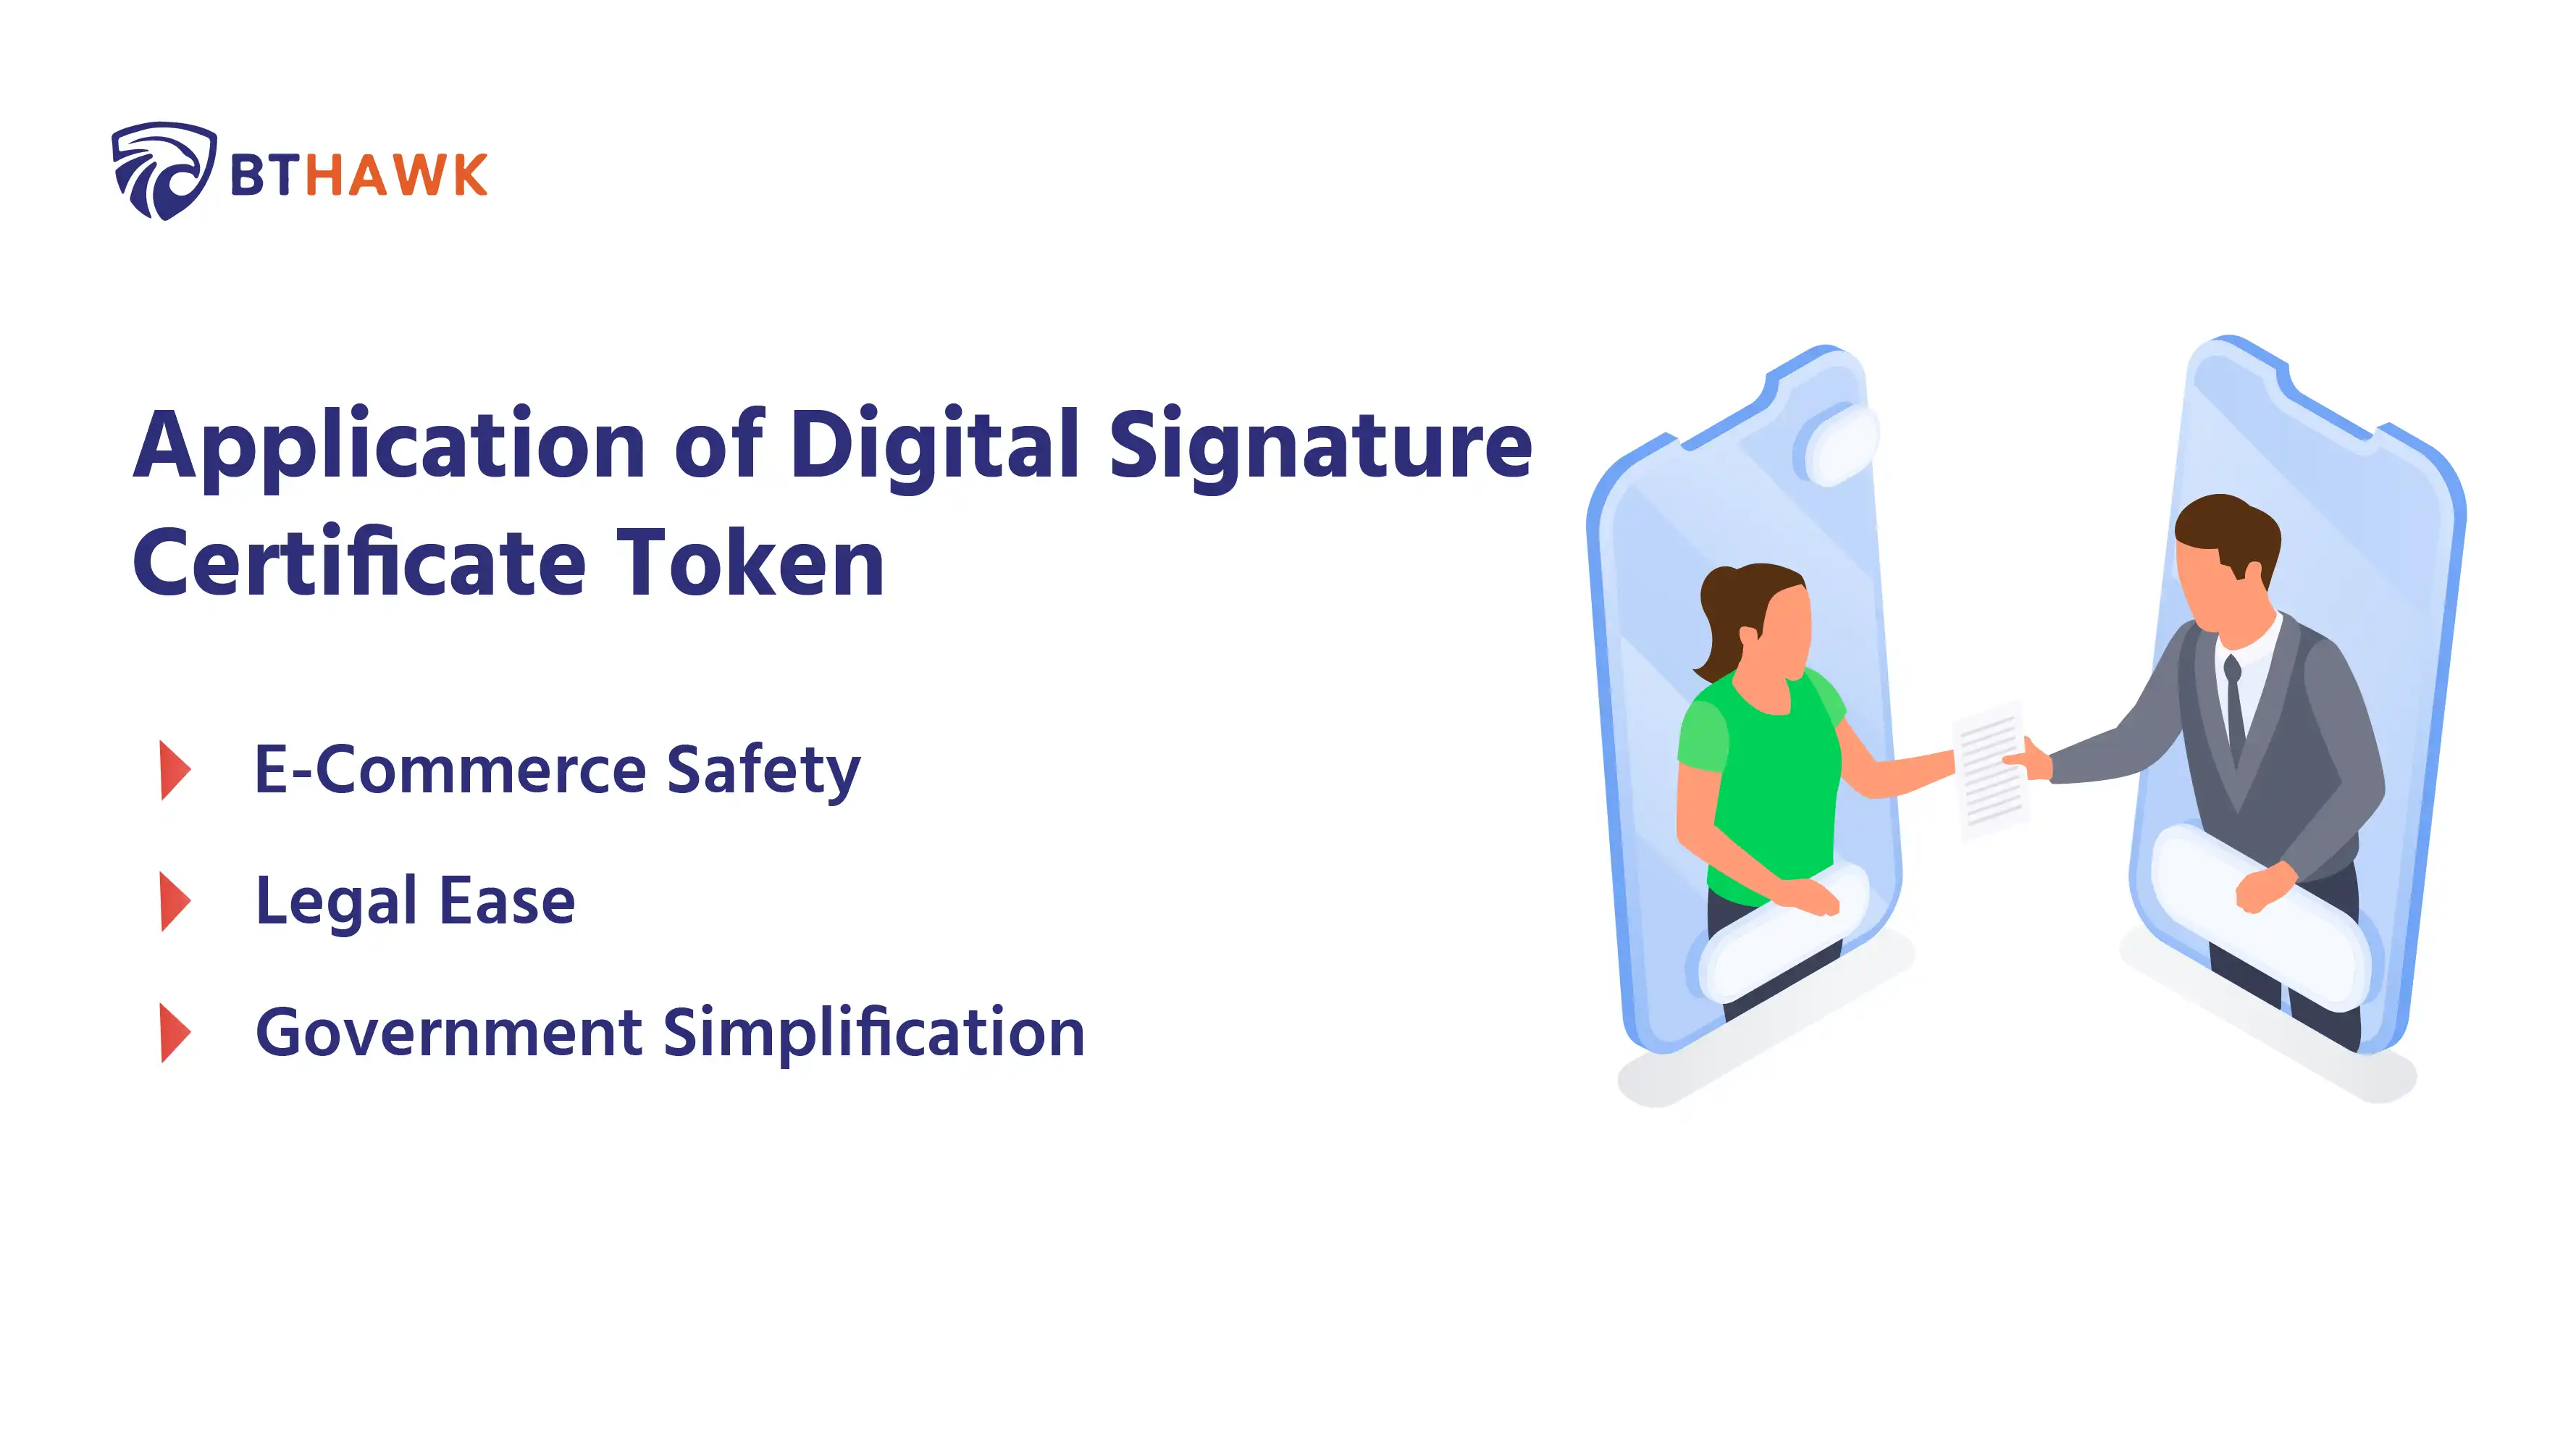 Application of a Digital Signature Certificate Token